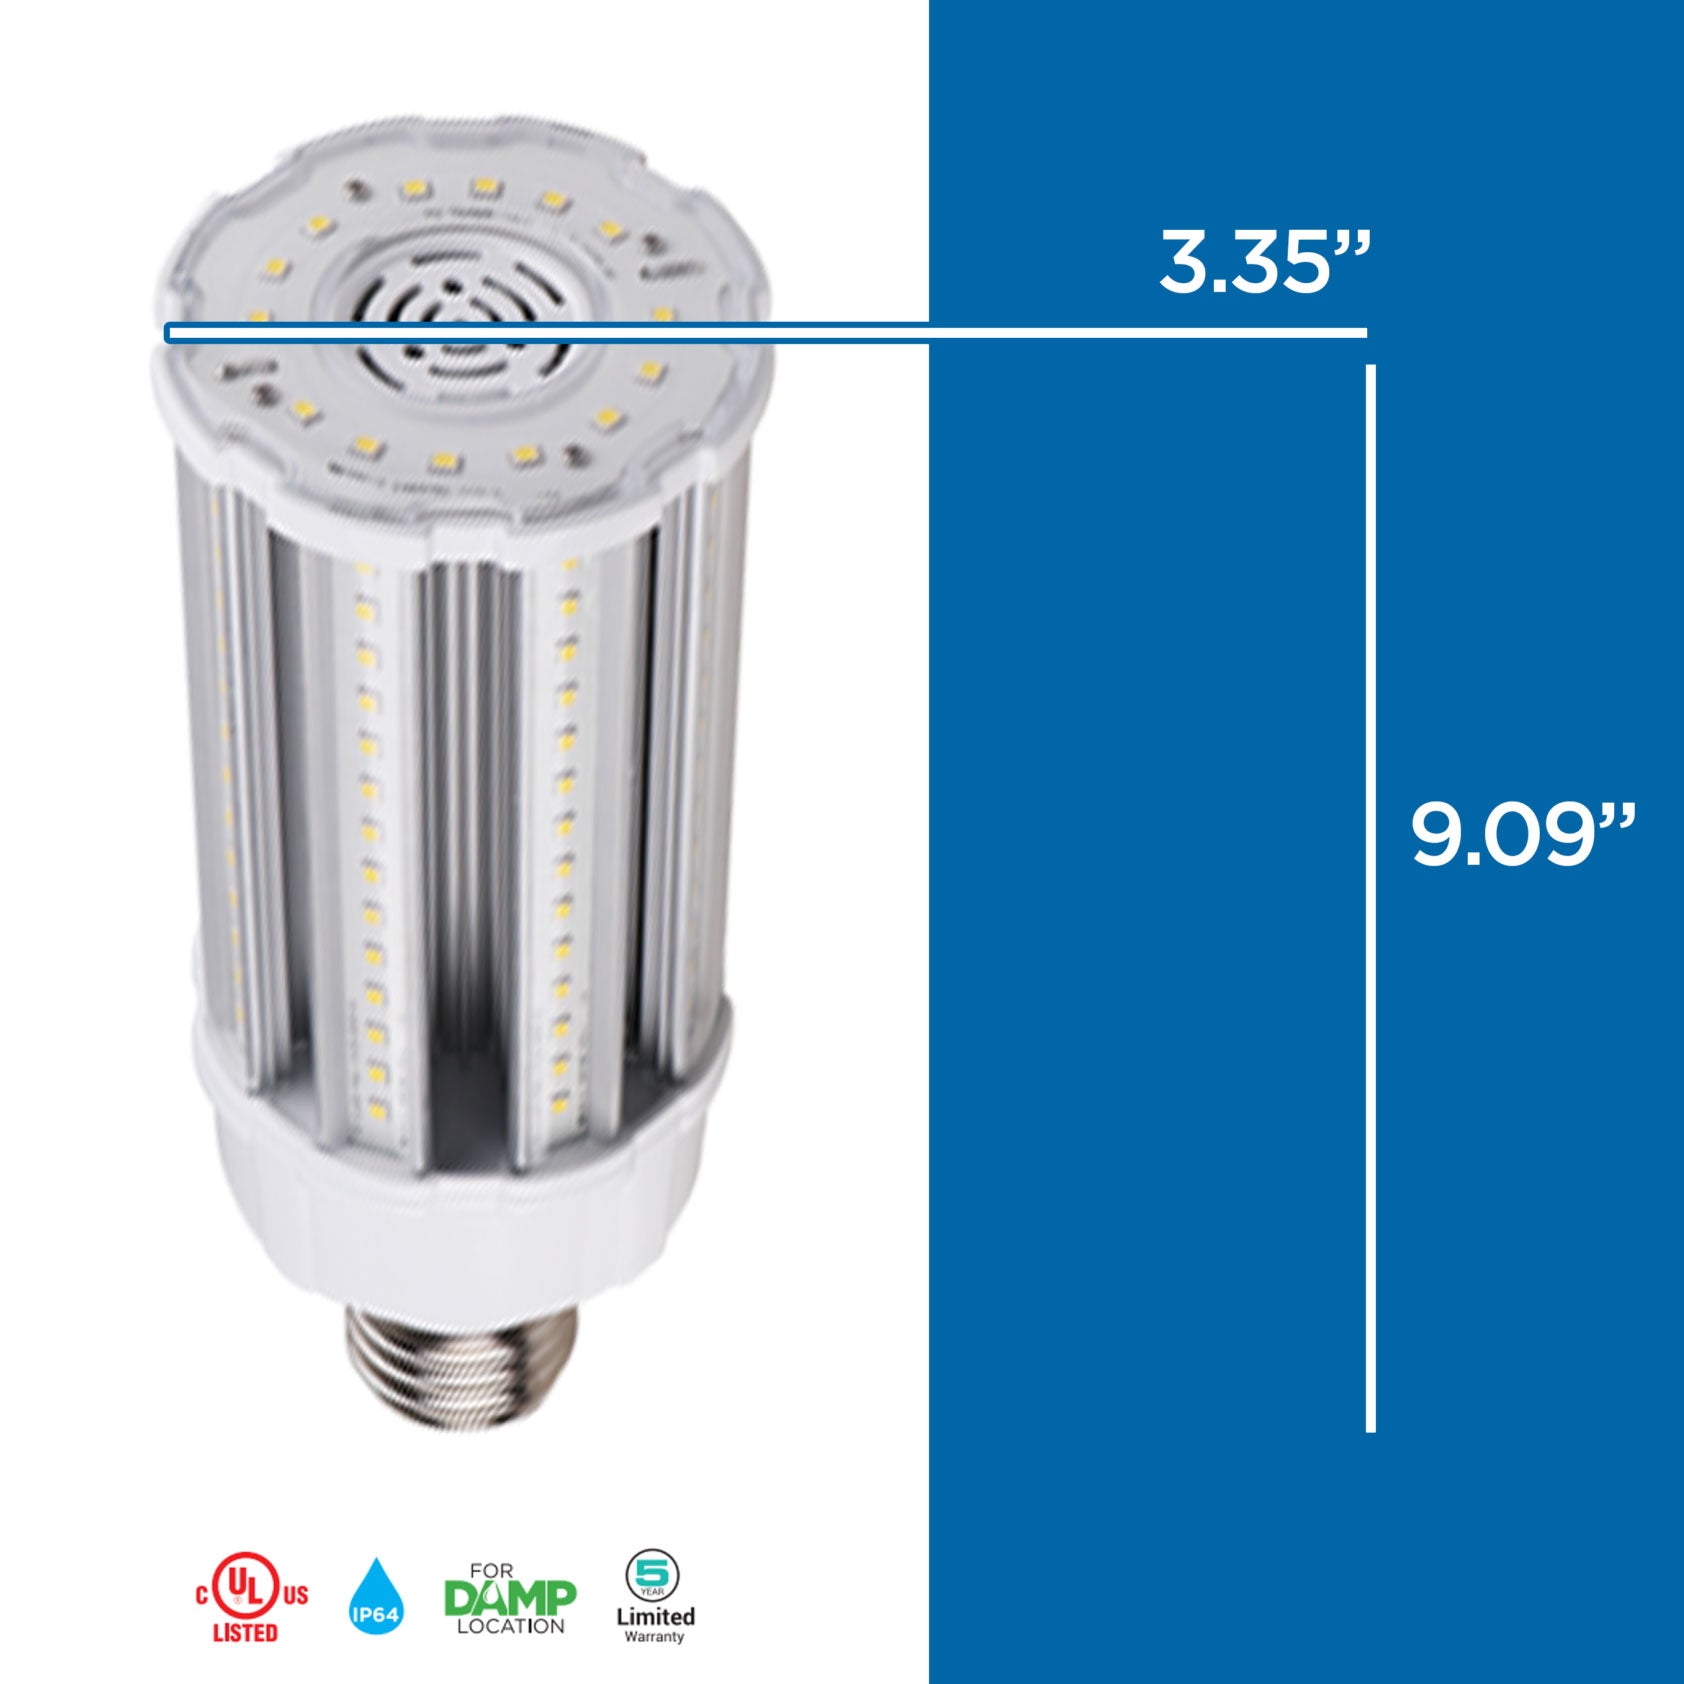  54-Watt LED 6,750 Lumens Corn Bulb - EX39/E26 Adapter Included